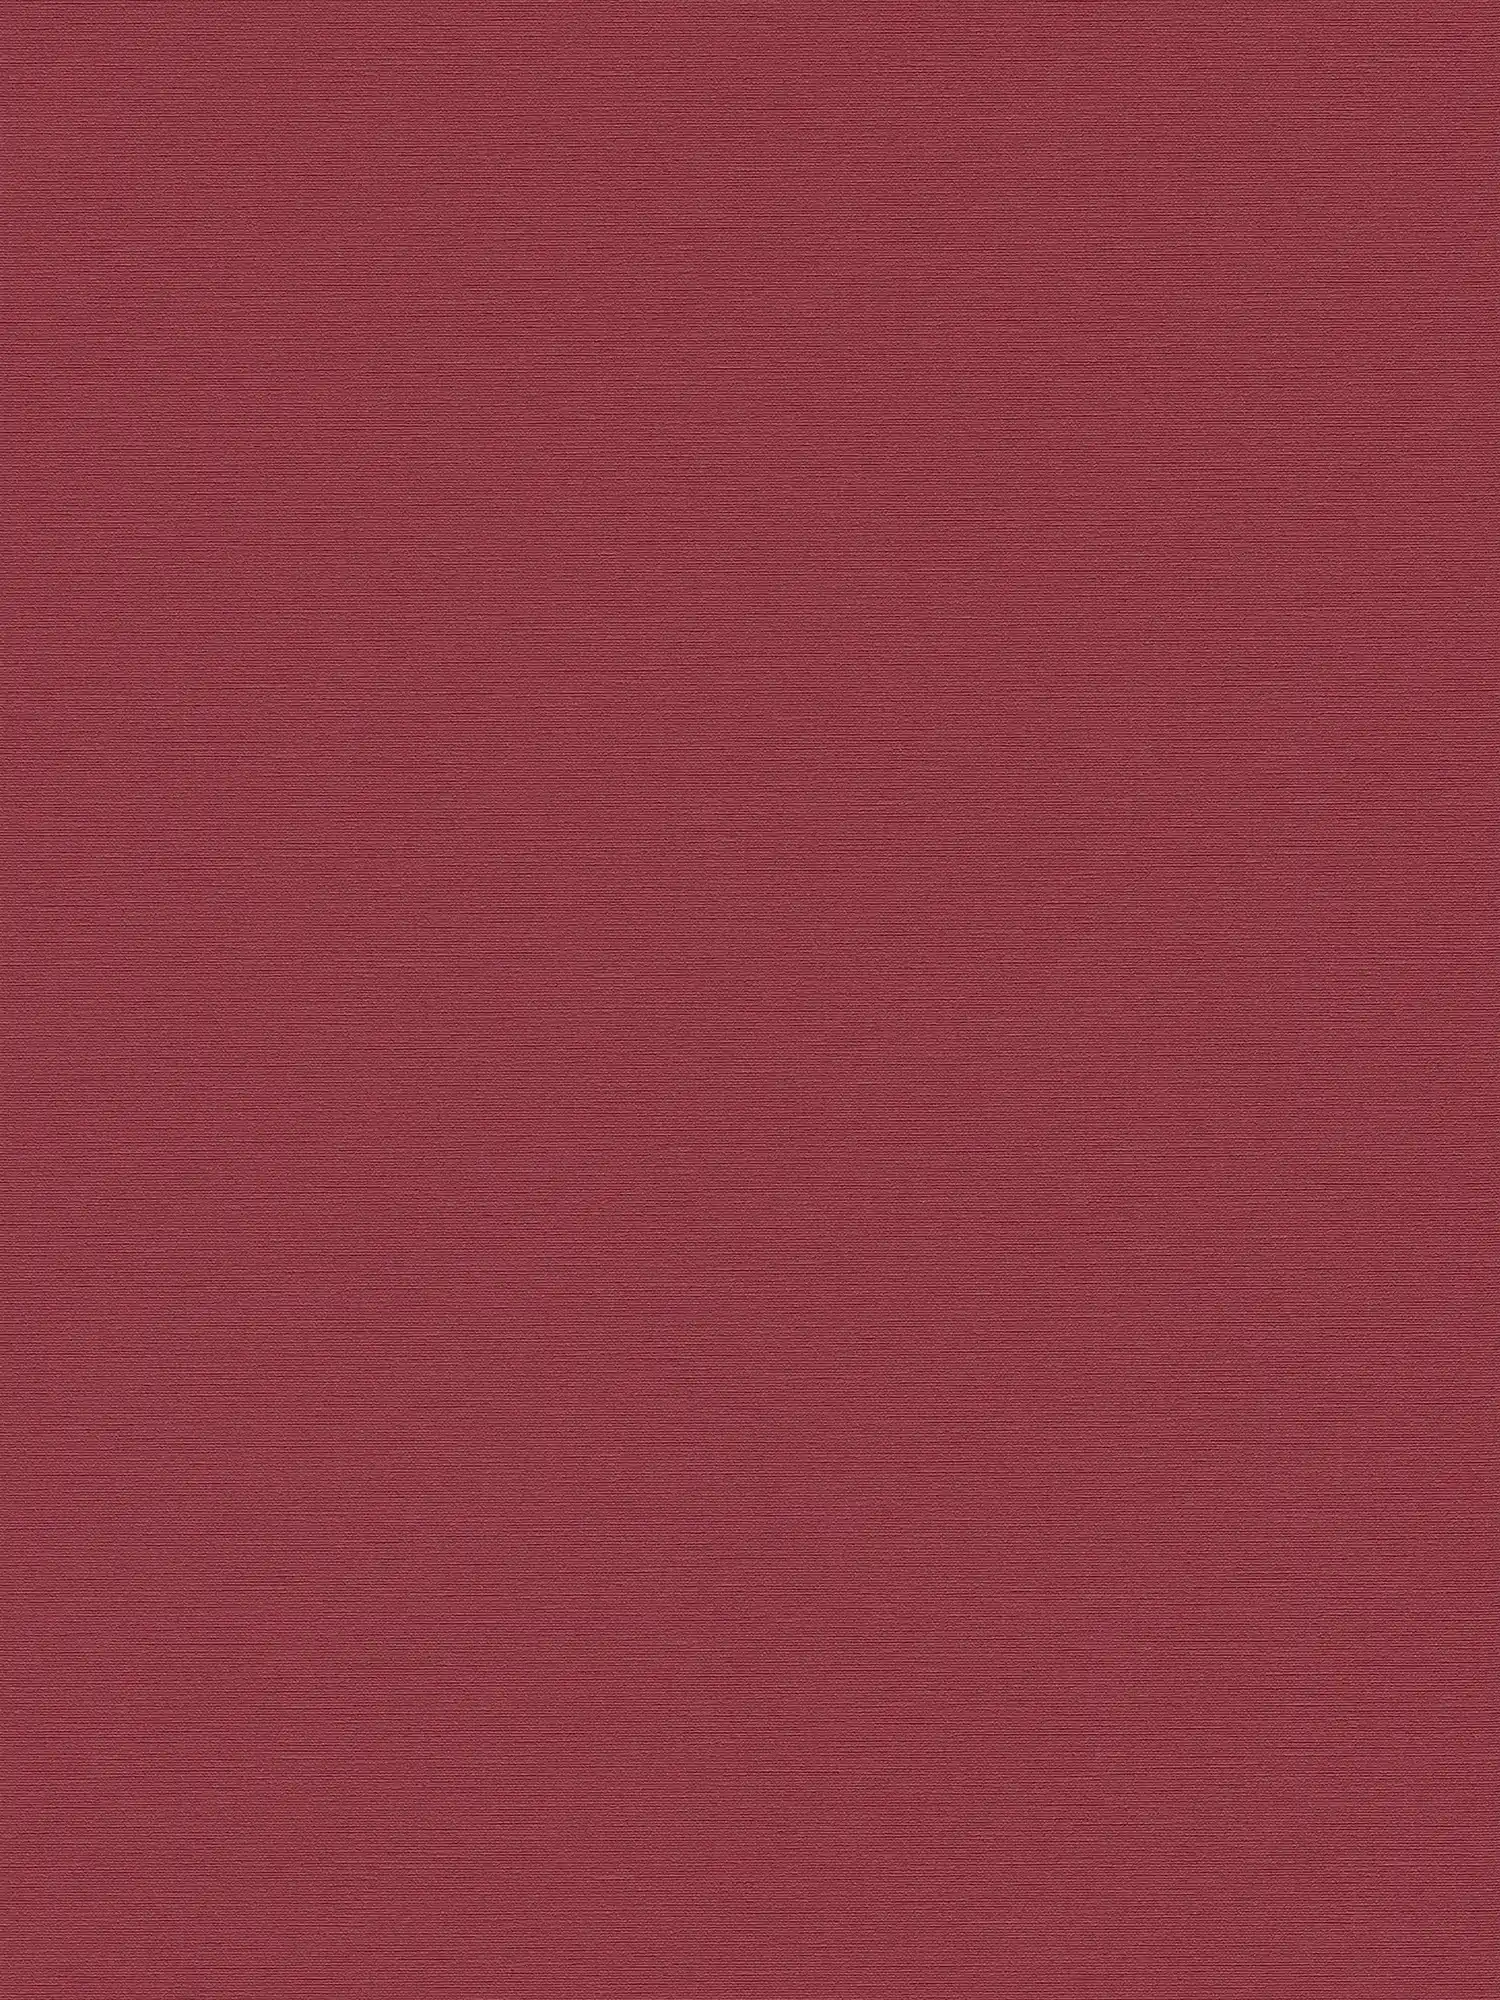 Papel pintado unitario de aspecto textil - rojo
